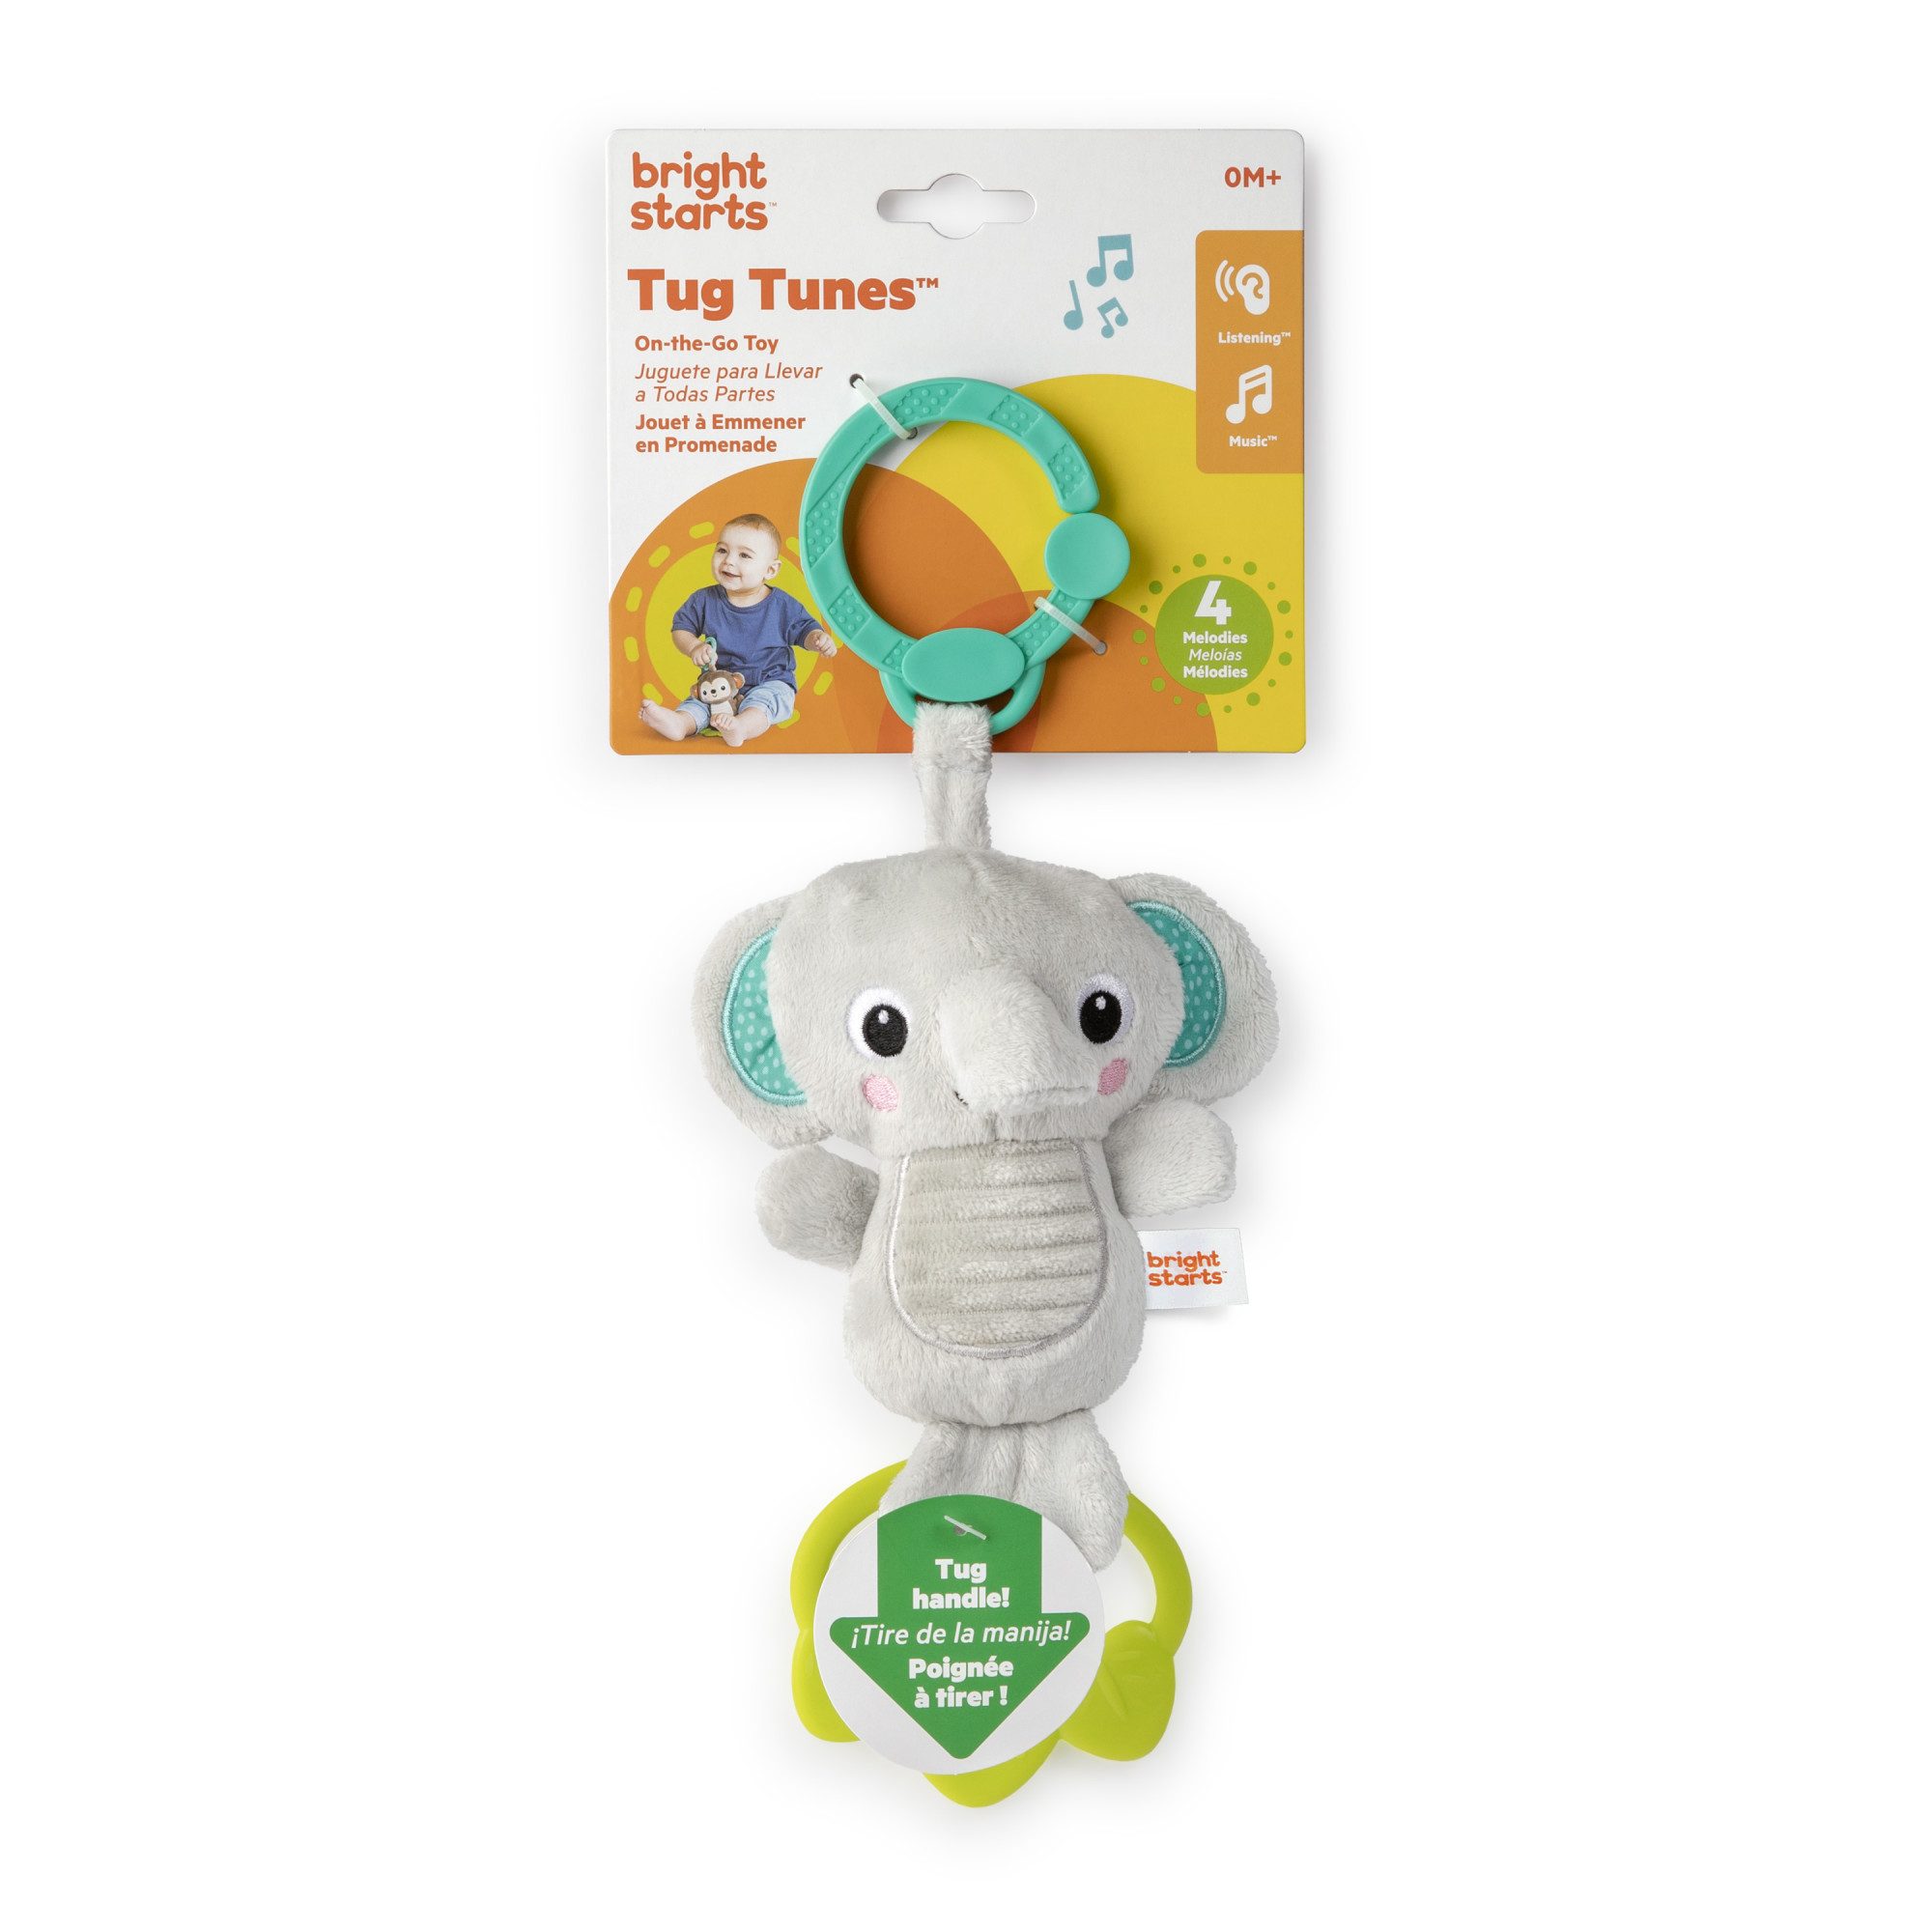 Bright Starts Kids II Tug Tunes Take Along Toy - Elephant Παιχνίδι 12339 - Bright Starts